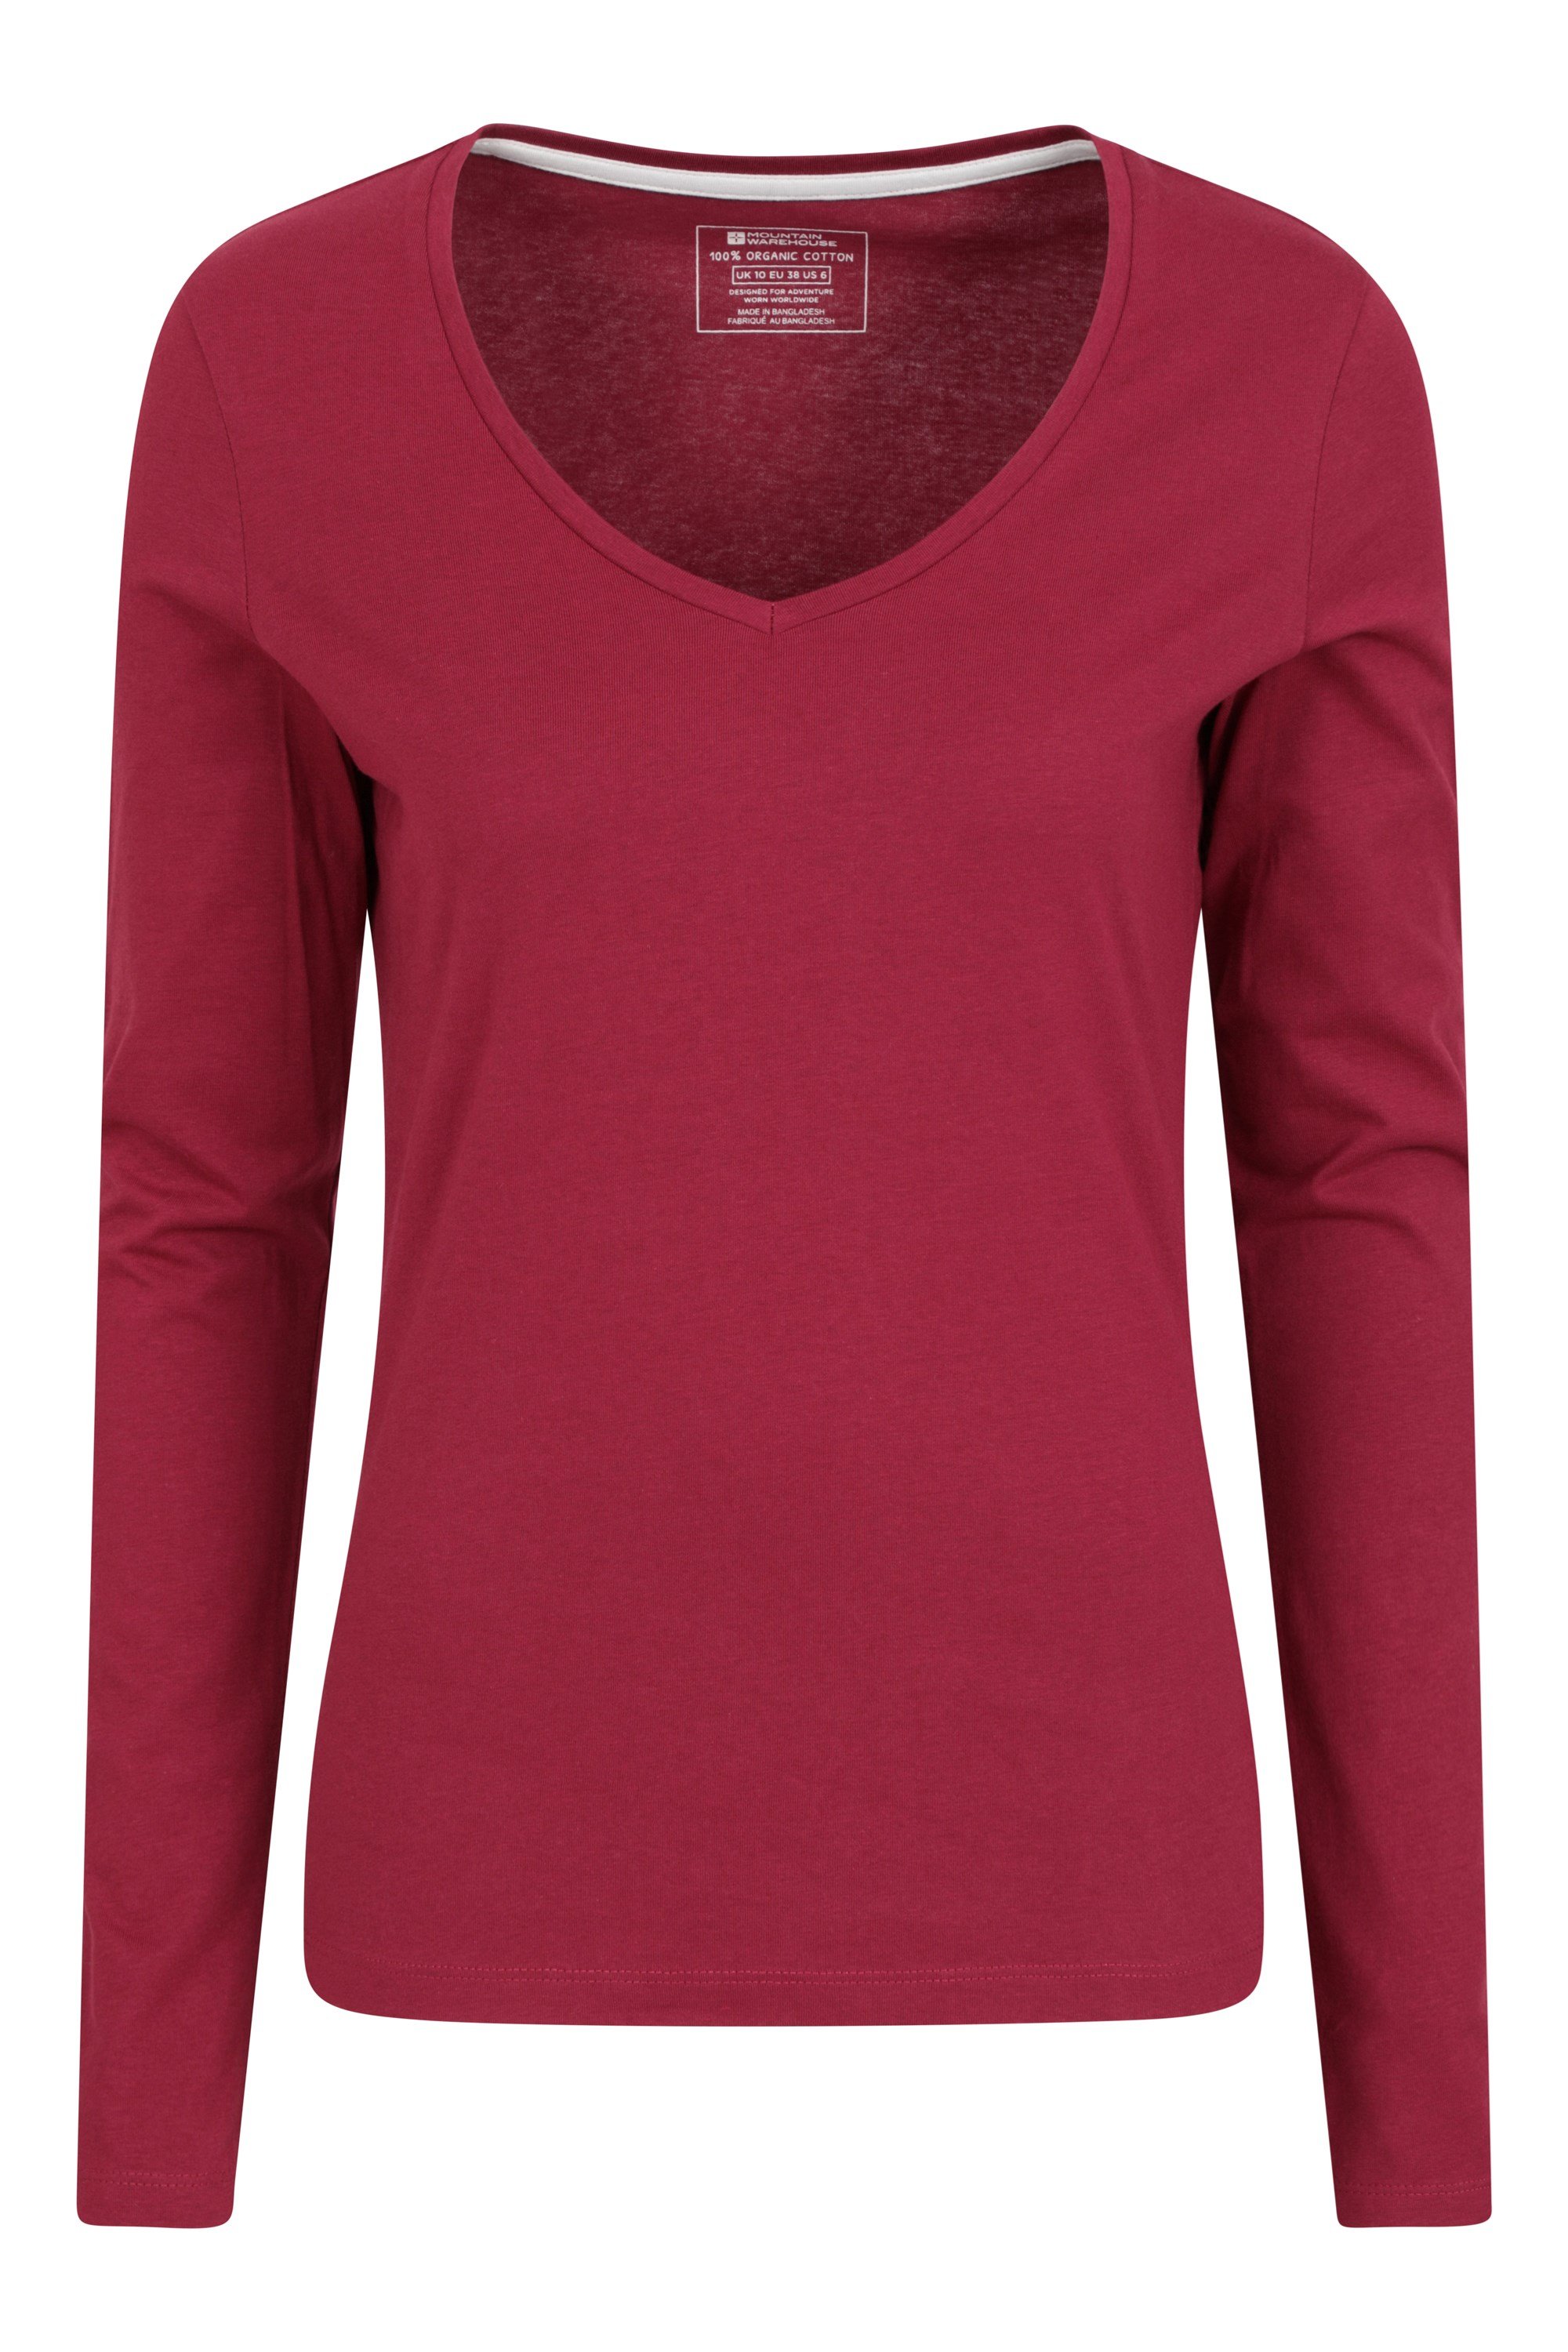 Mountain Warehouse Wms Zakopane Womens Printed Long Sleeved Tee Tshirt 